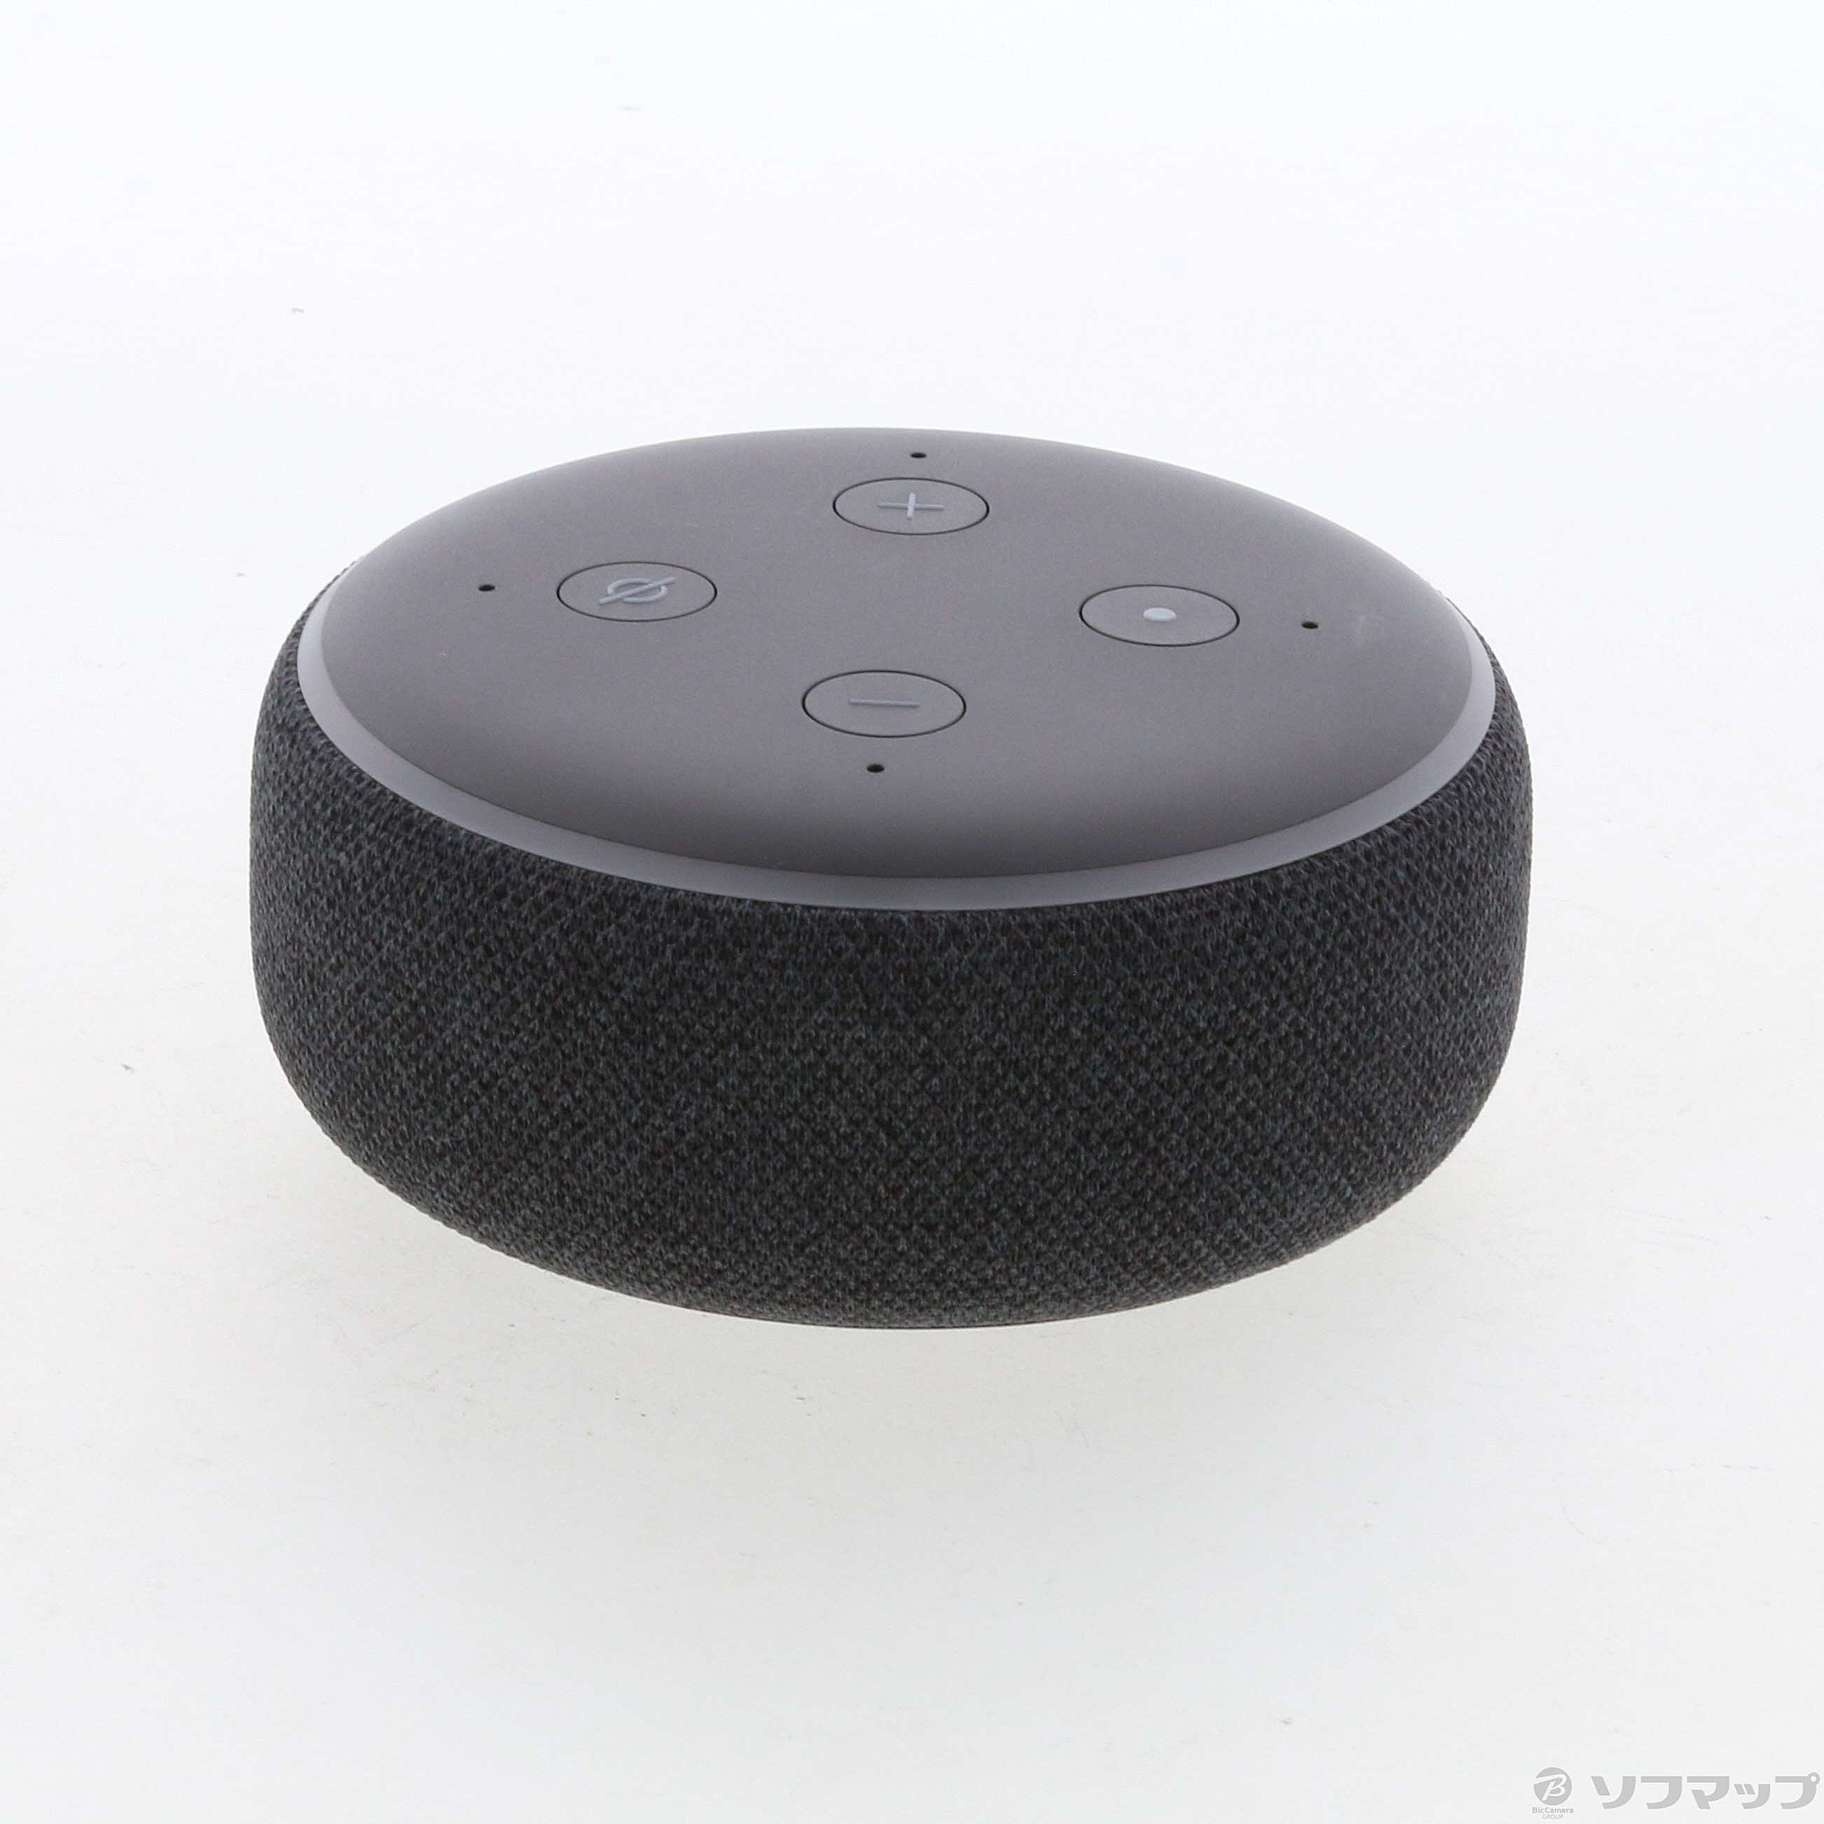 Amazon Echo Dot 第3世代 with Alexa チャコール B…